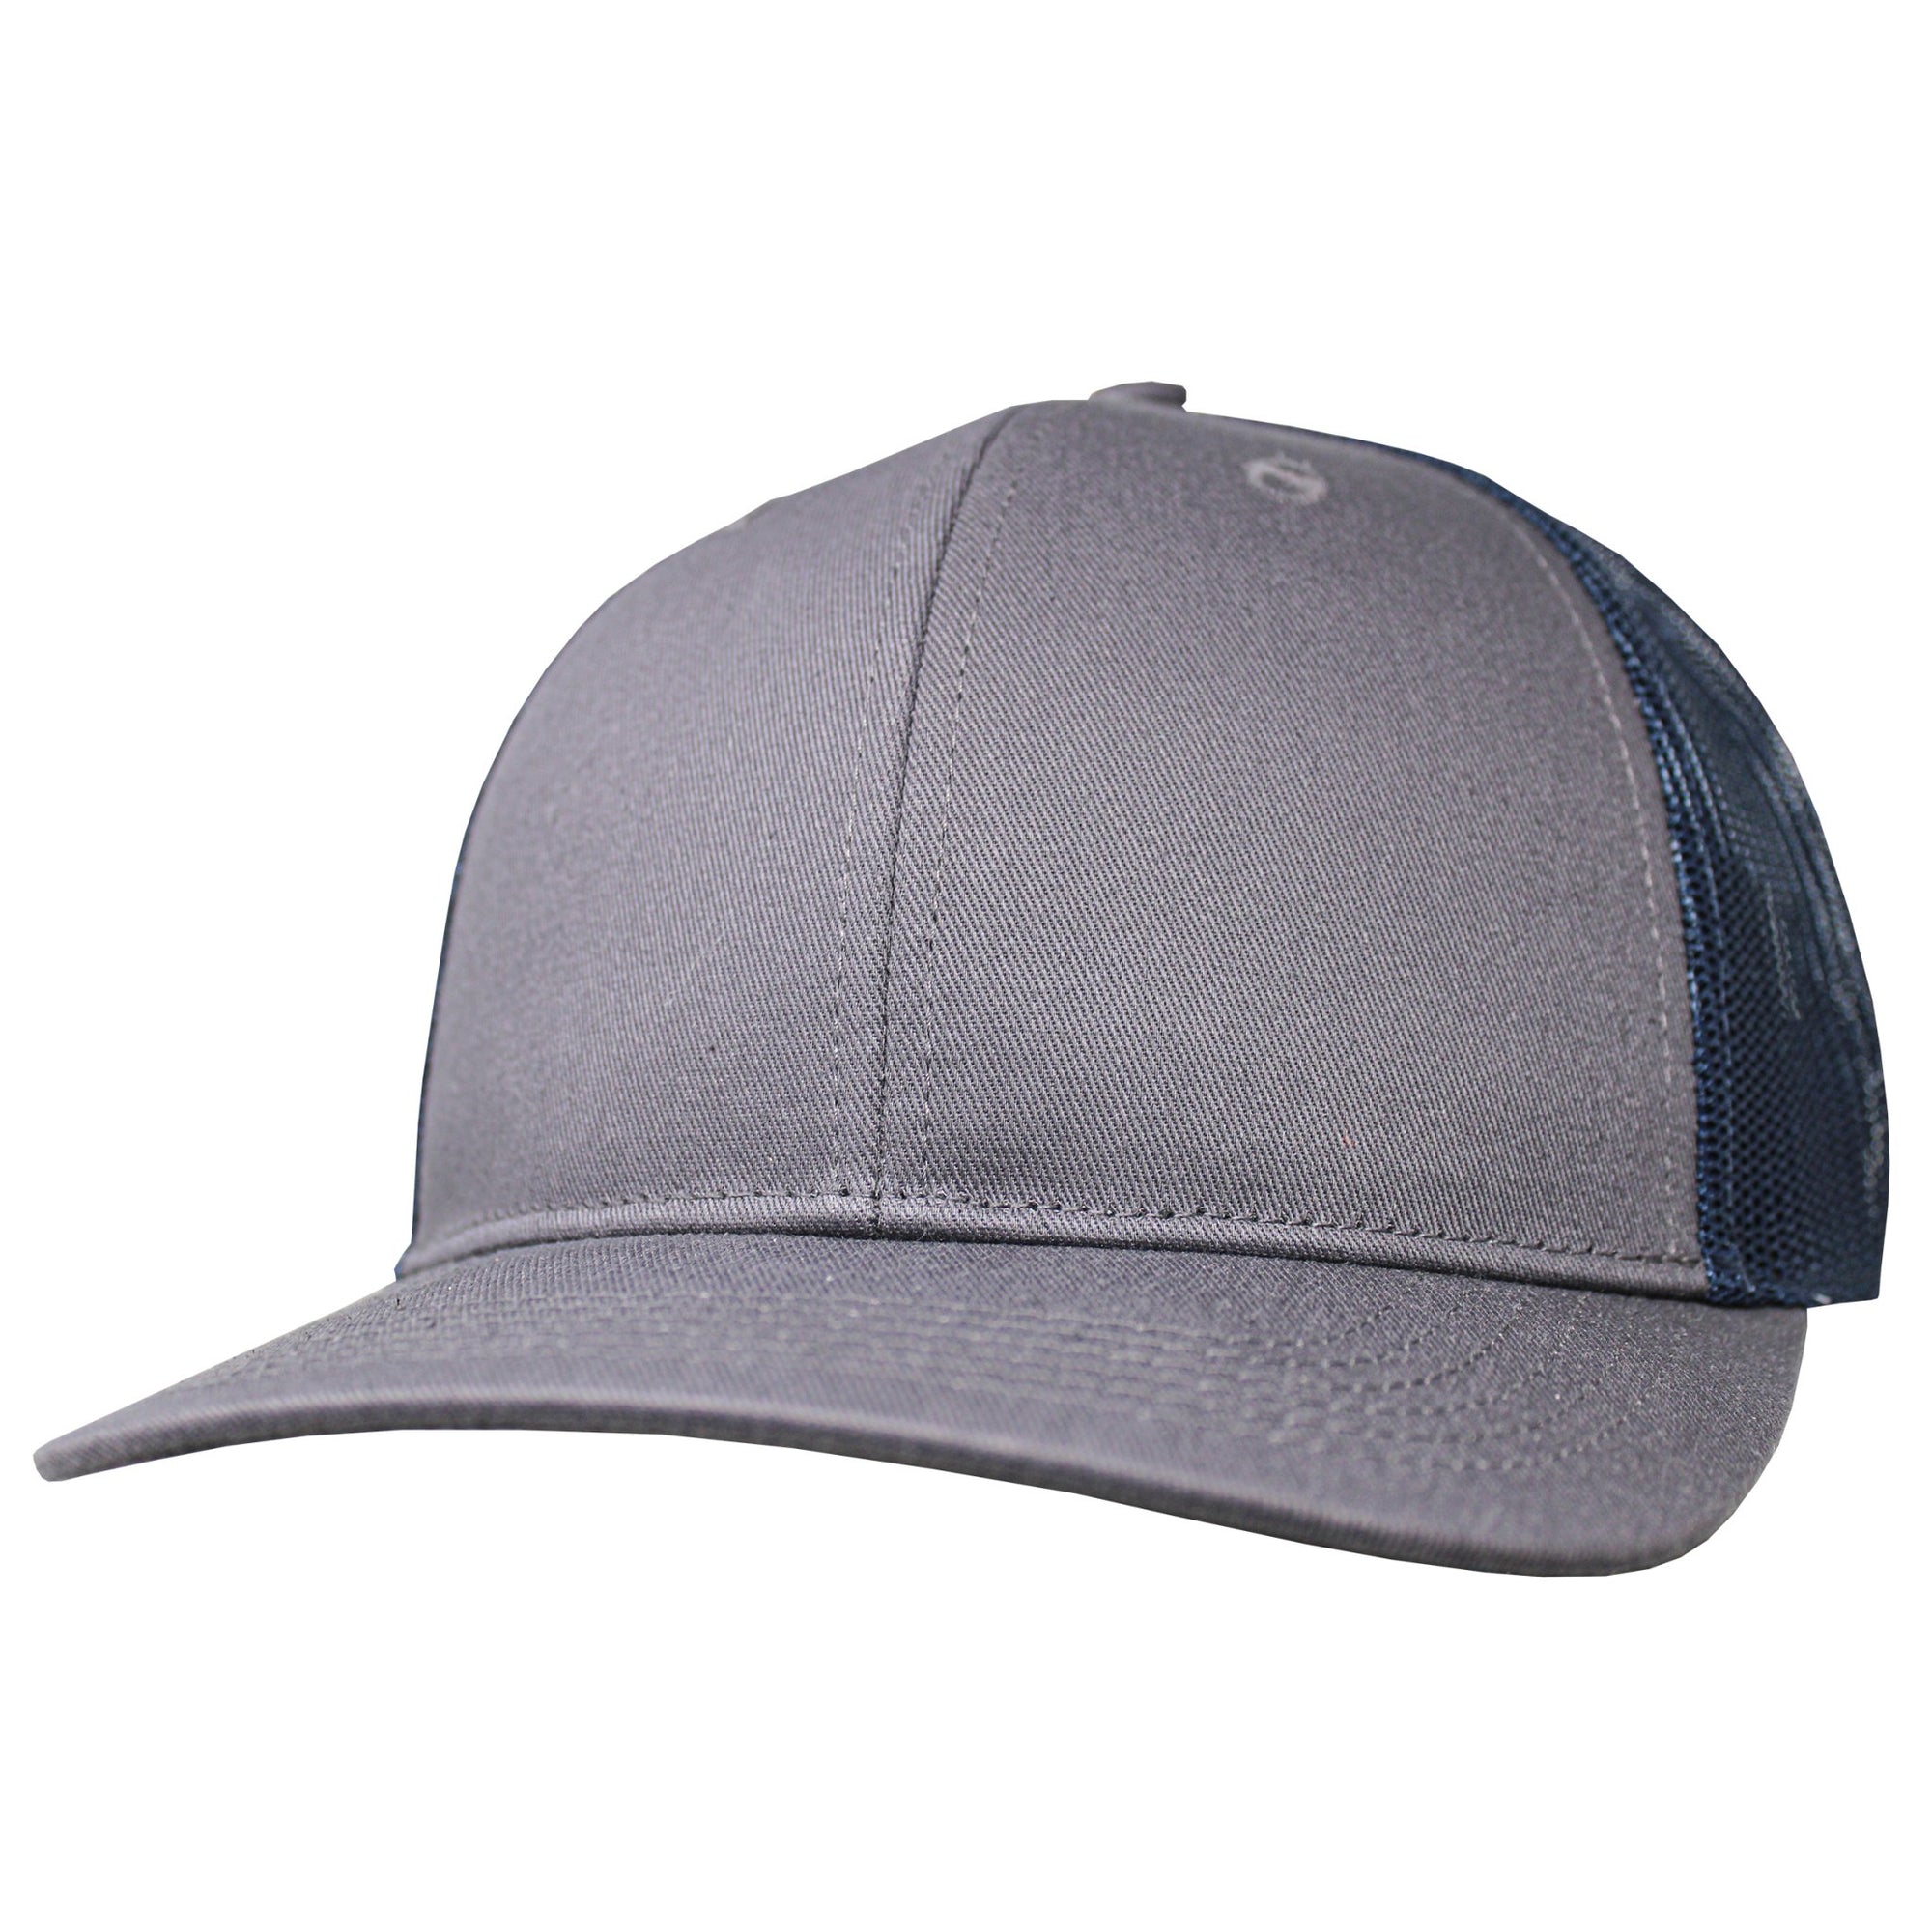 Blank Headwear - BC23 / 6 Panel Performance Trucker Cap - Dark Gray / Navy - Black Cat MFG - Hat